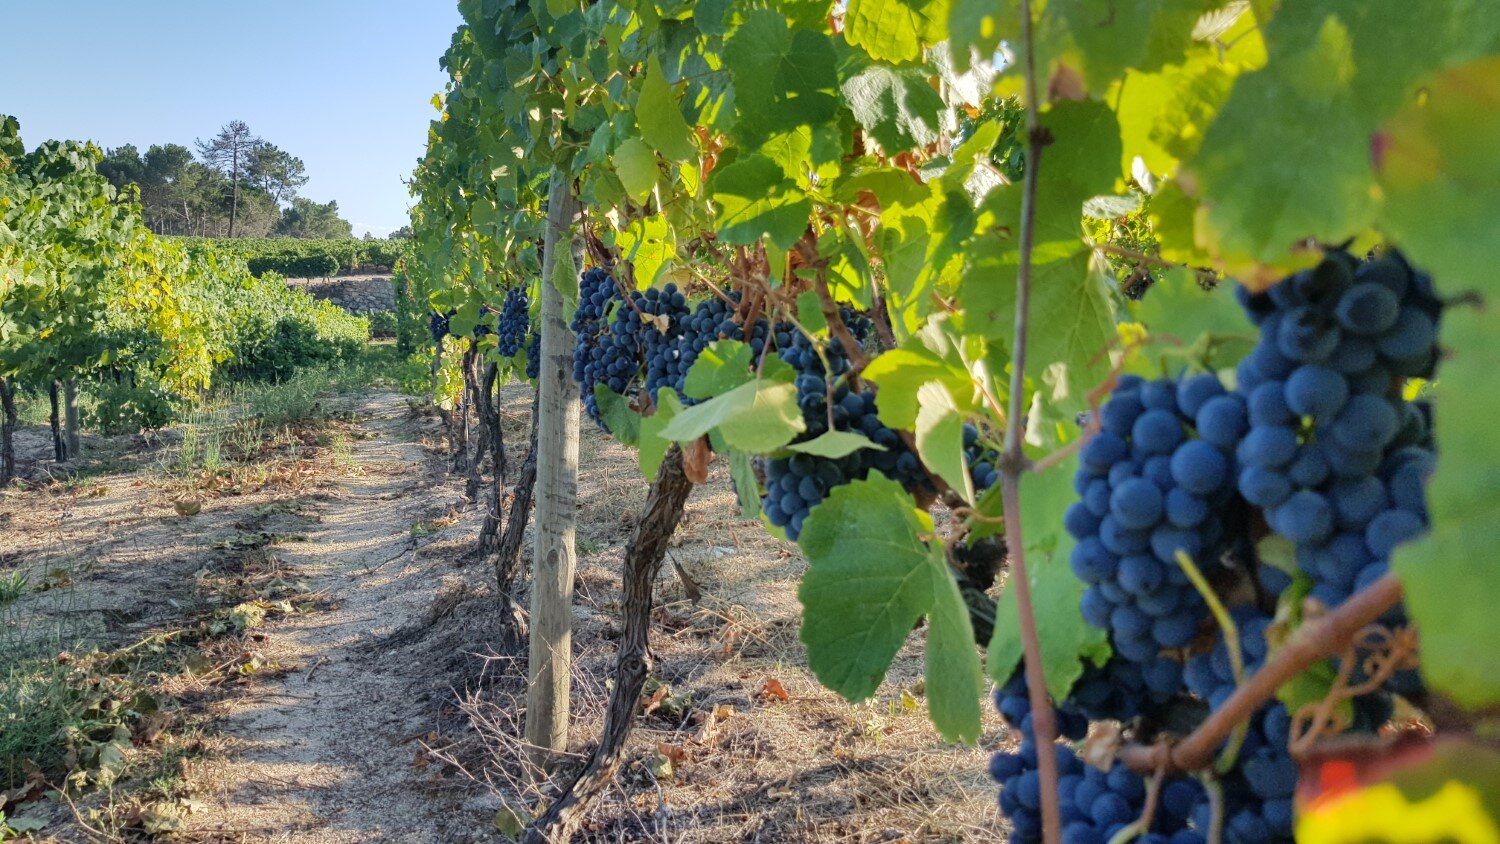 web-photo-pedra-cancela-vineyard--grapes-portugal.jpg